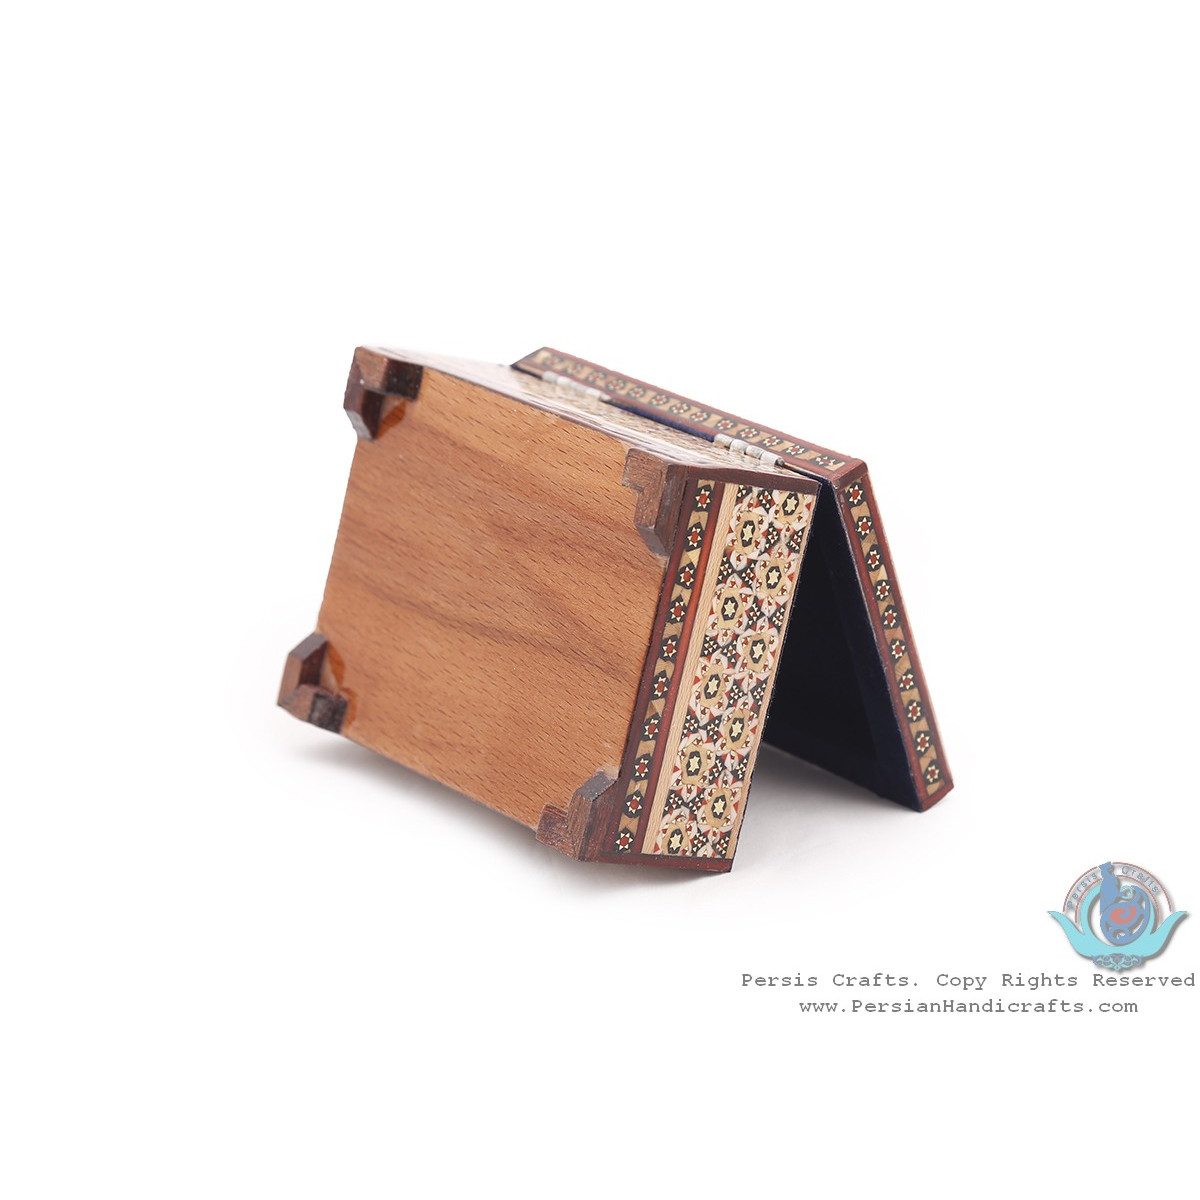 Khatam Marquetry with Chogan Miniature on Jewelry Box - HKH3911-Persian Handicrafts